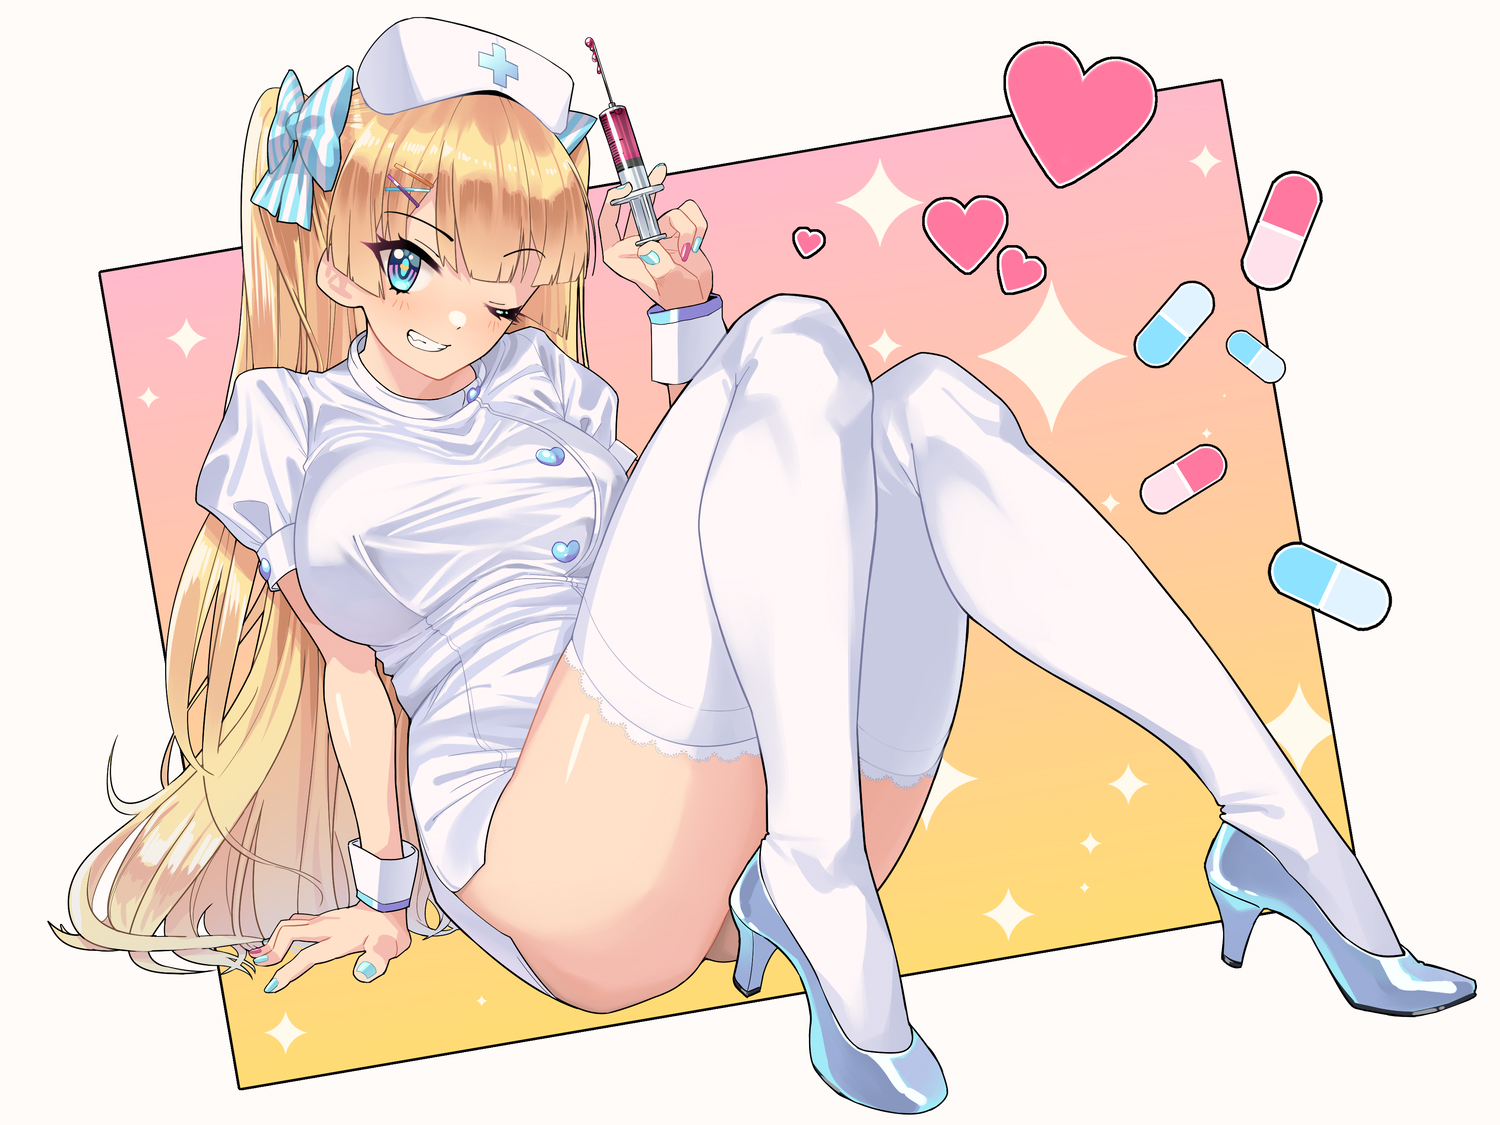 Anime 1500x1125 anime anime girls digital art artwork 2D portrait Kaedeko blonde blue eyes smiling wink nurse outfit thigh-highs